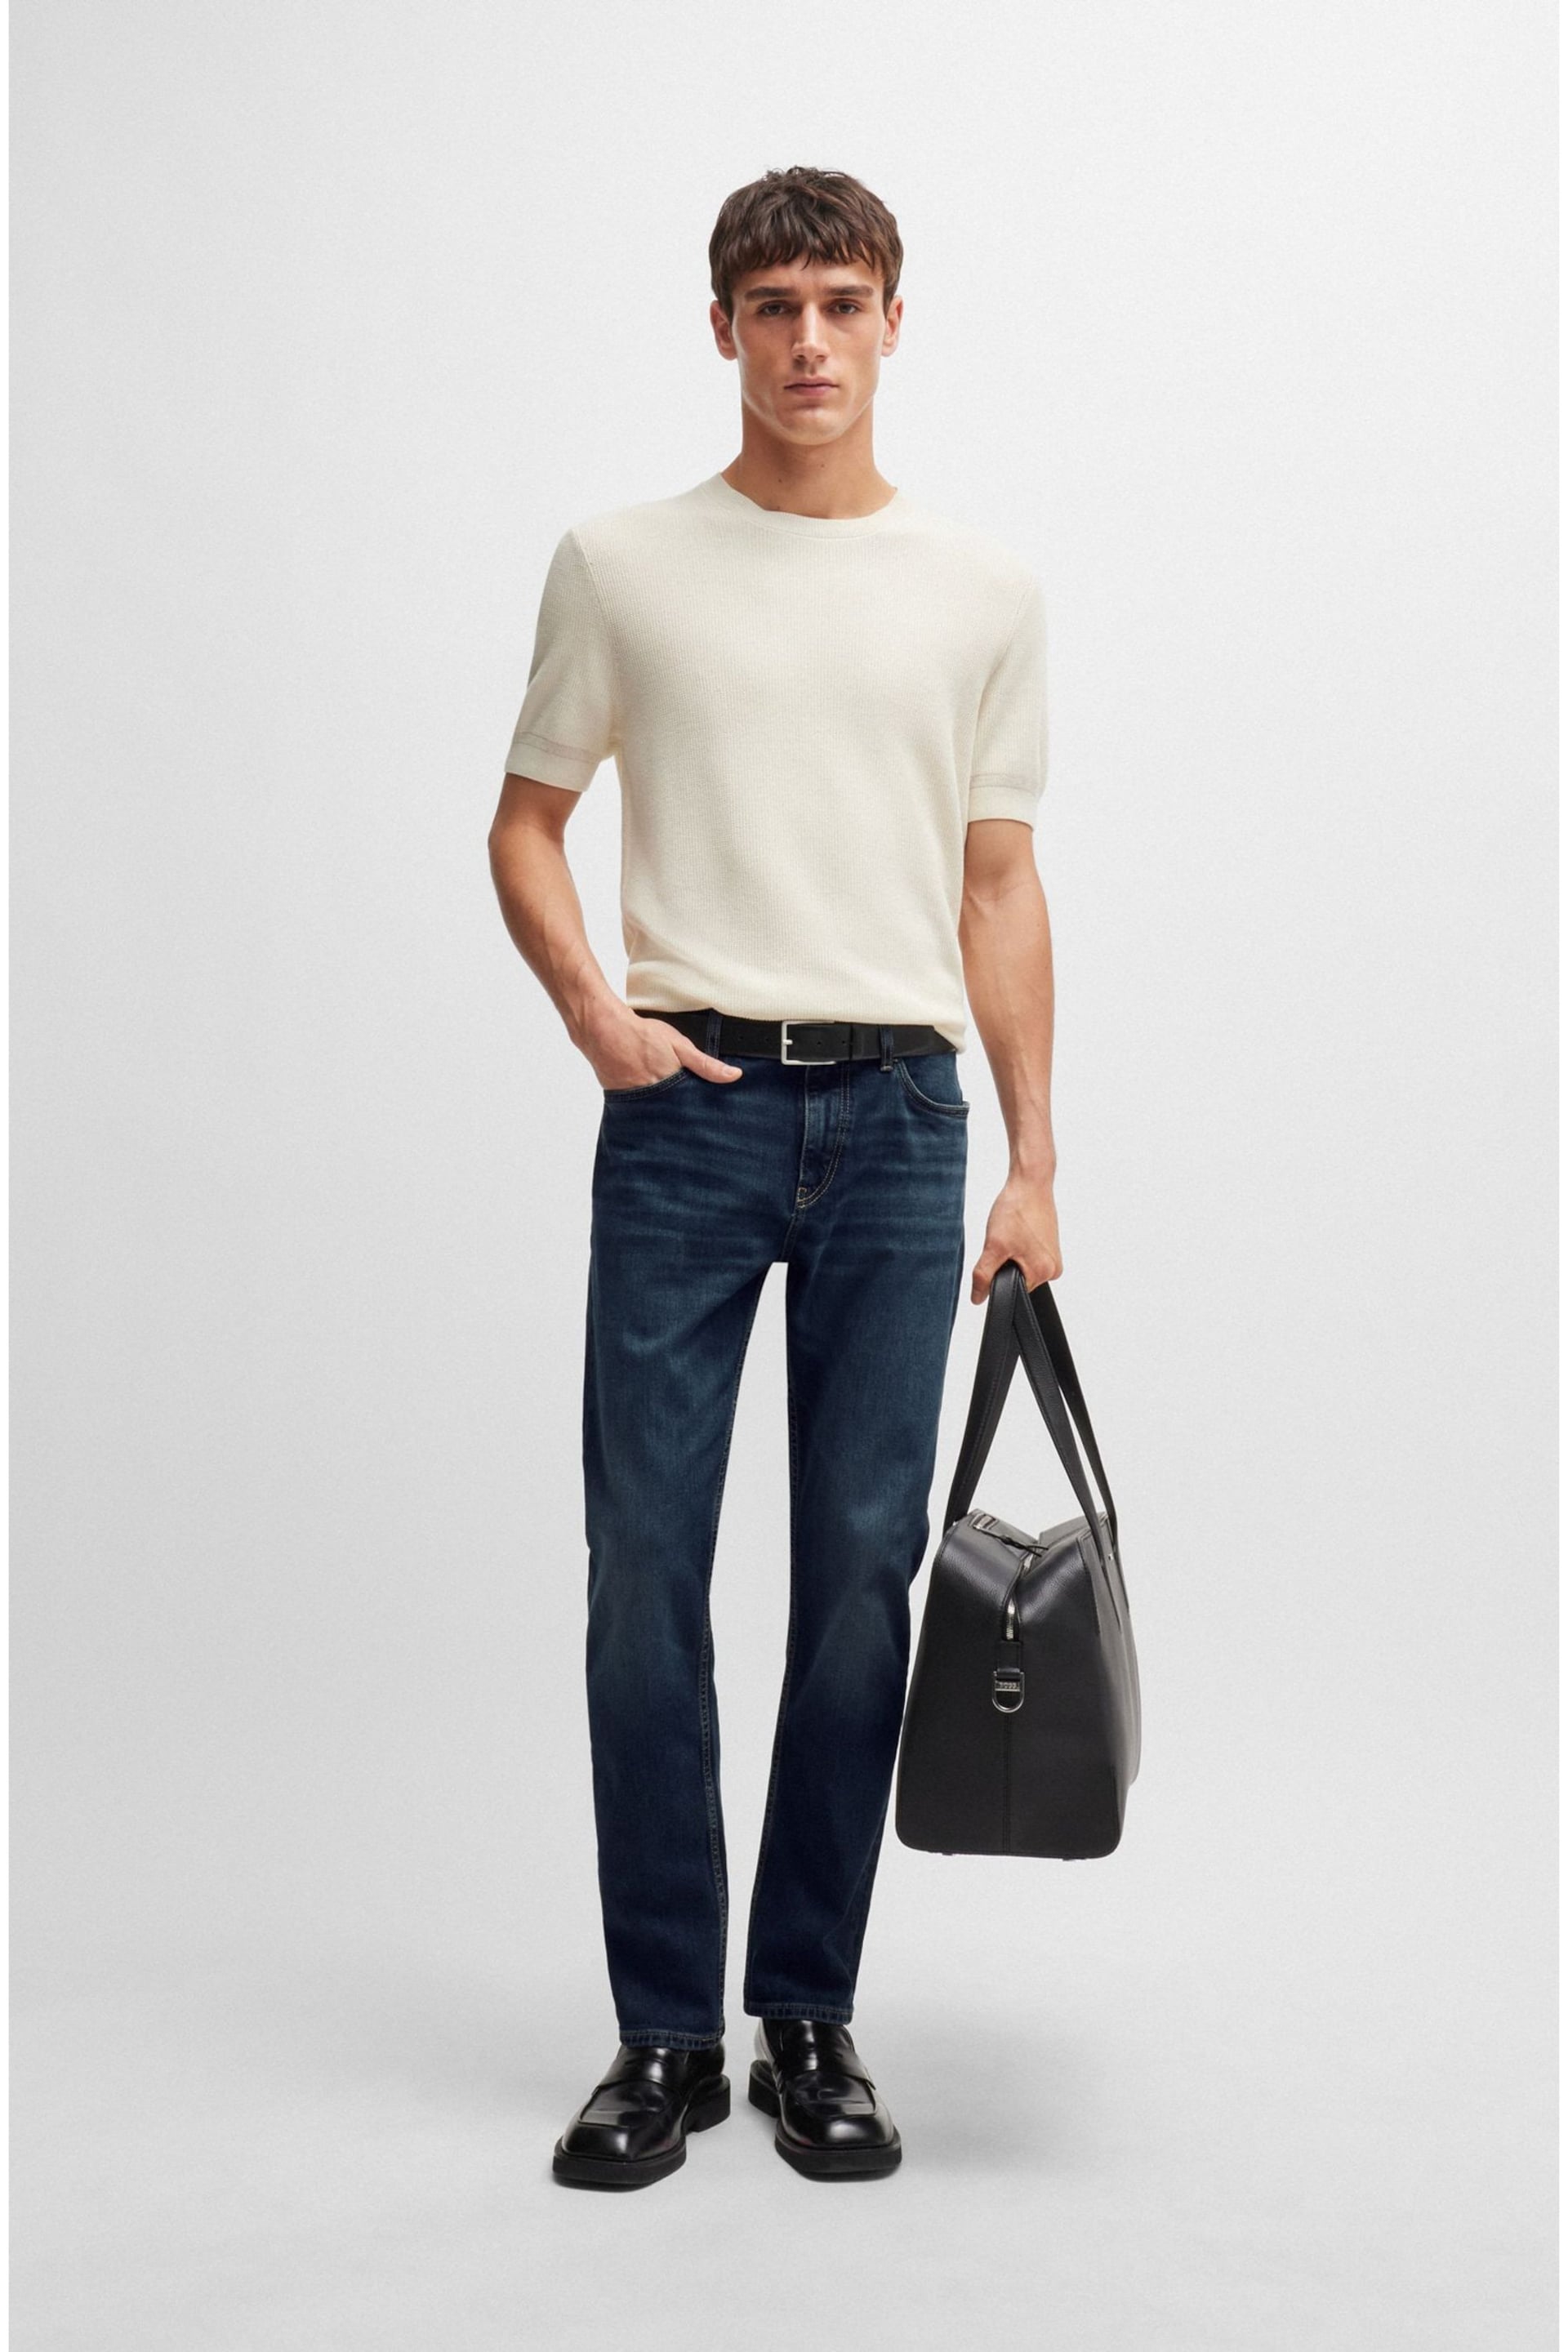 BOSS Blue Slim Fit Jeans in Comfort Stretch Denim - Image 1 of 5